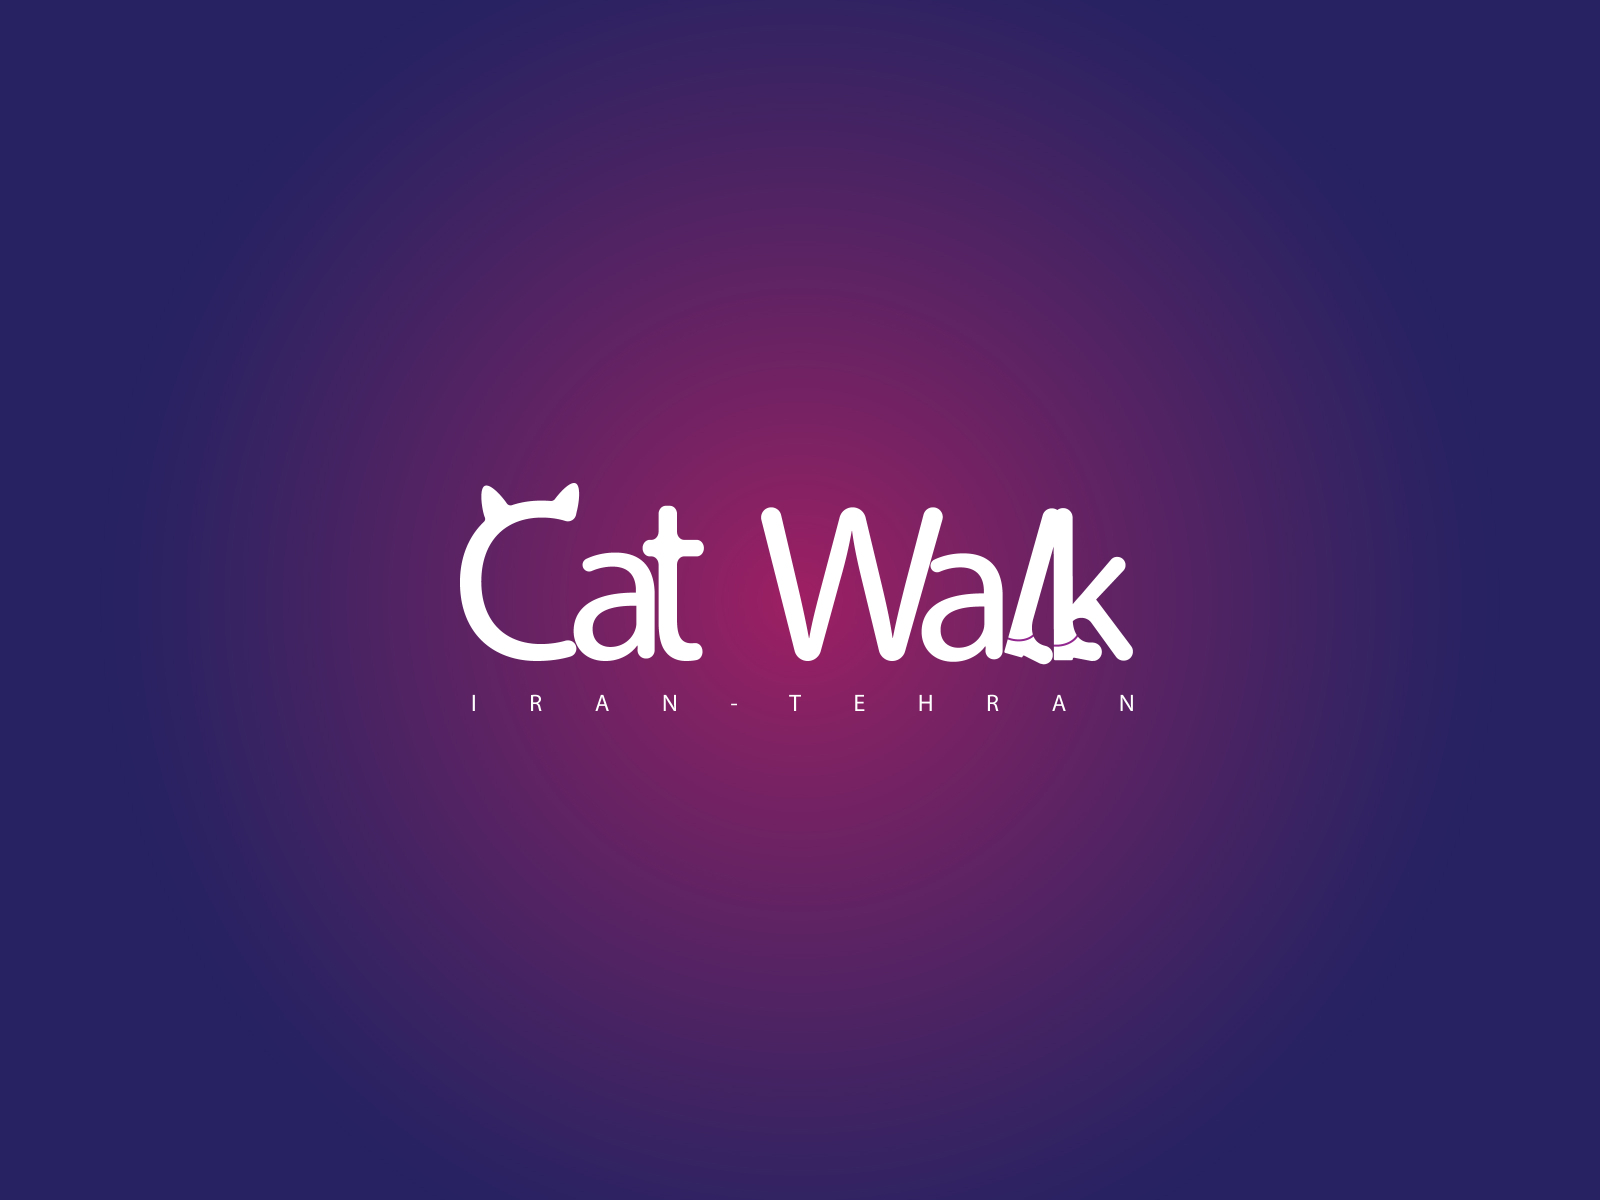 Cat Walk by Alireza Kharkan on Dribbble